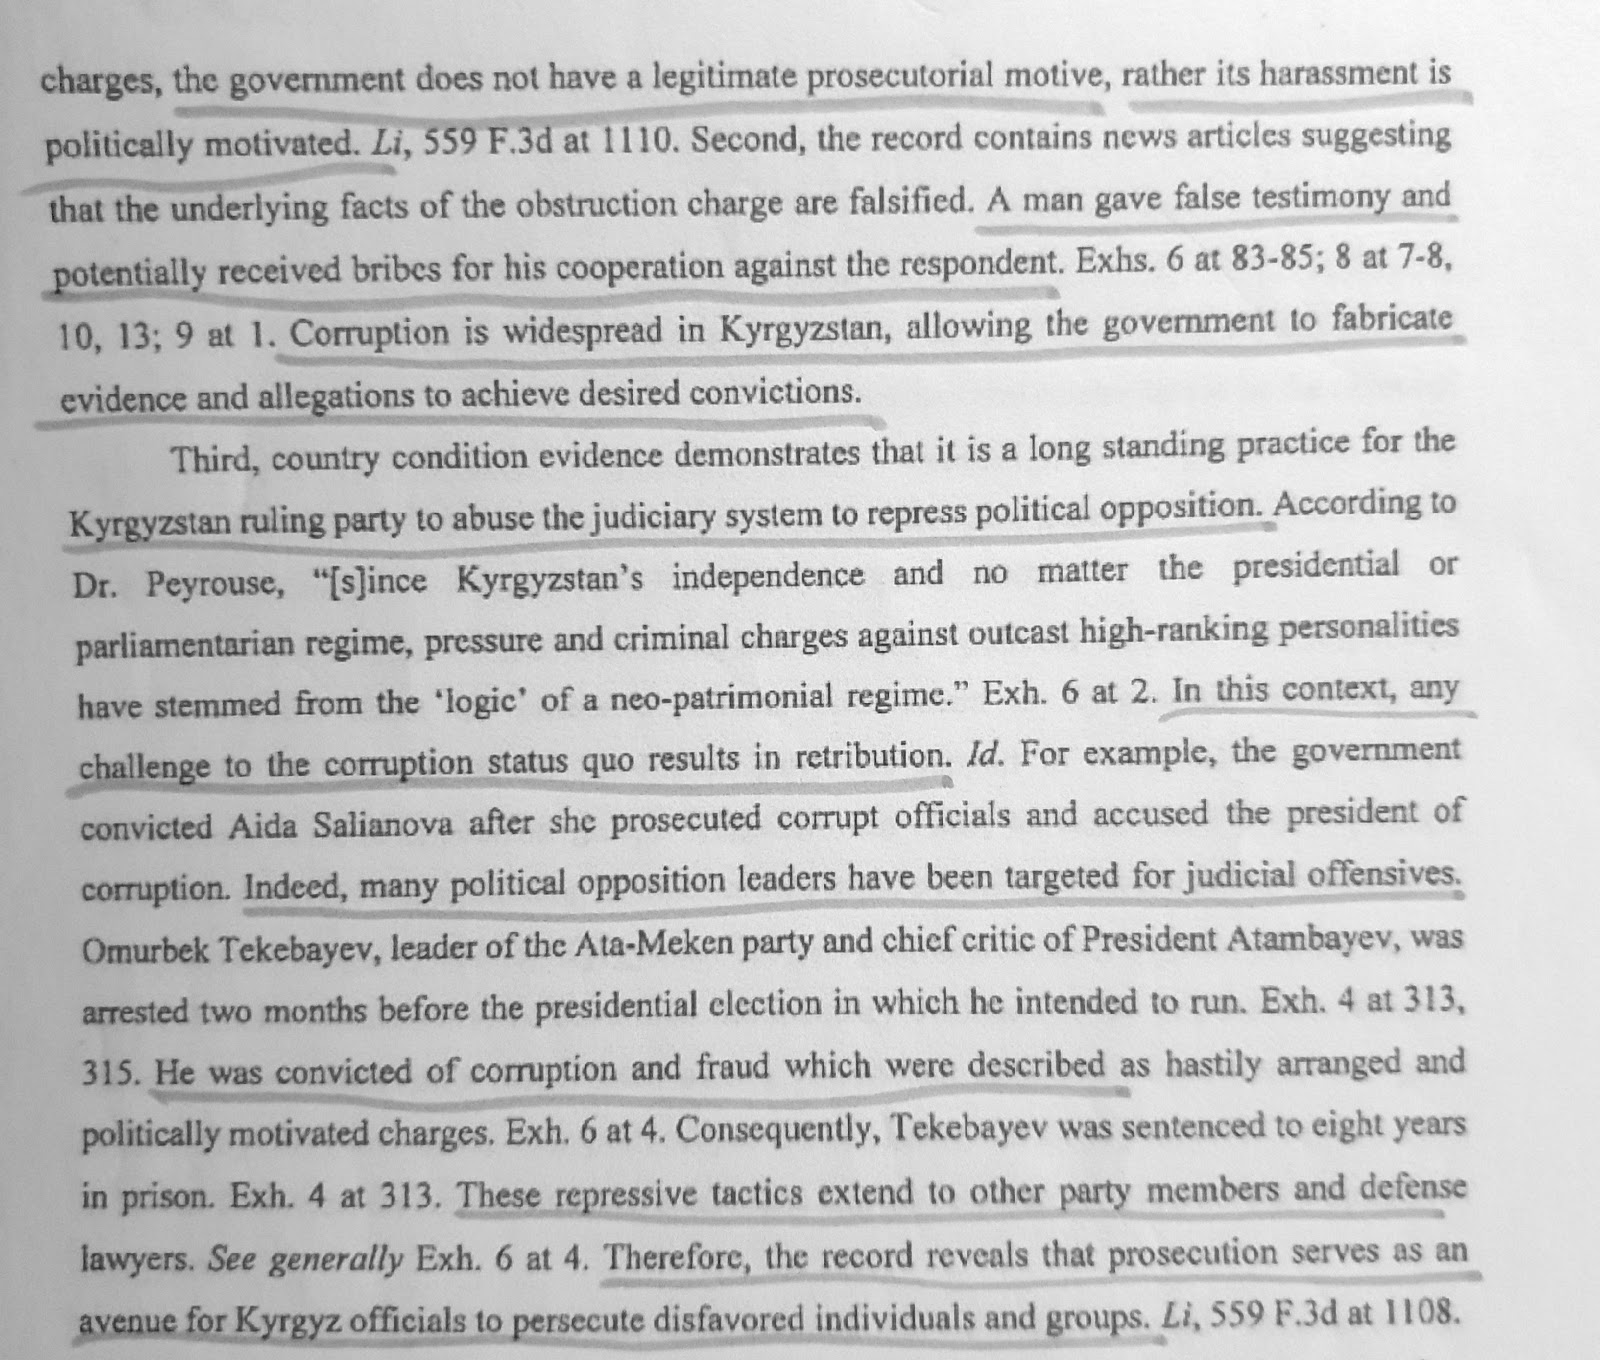 Excerpt from Kansas city immigration court decision on Kalybek Eltuibasov